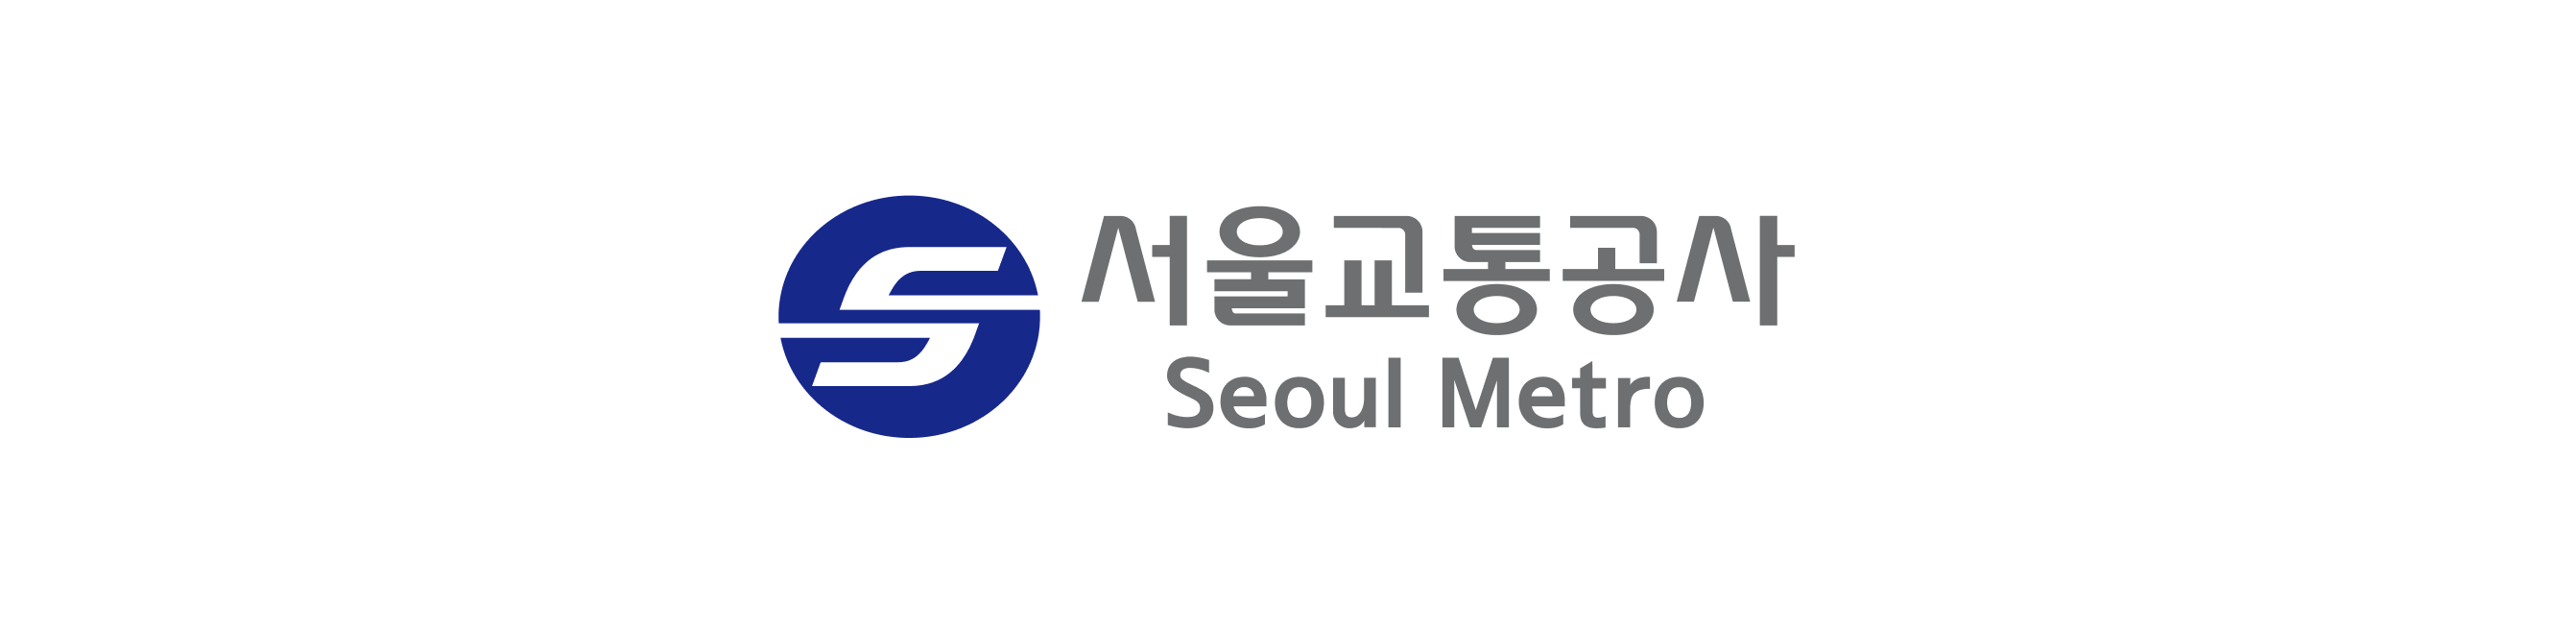 seoul_metro